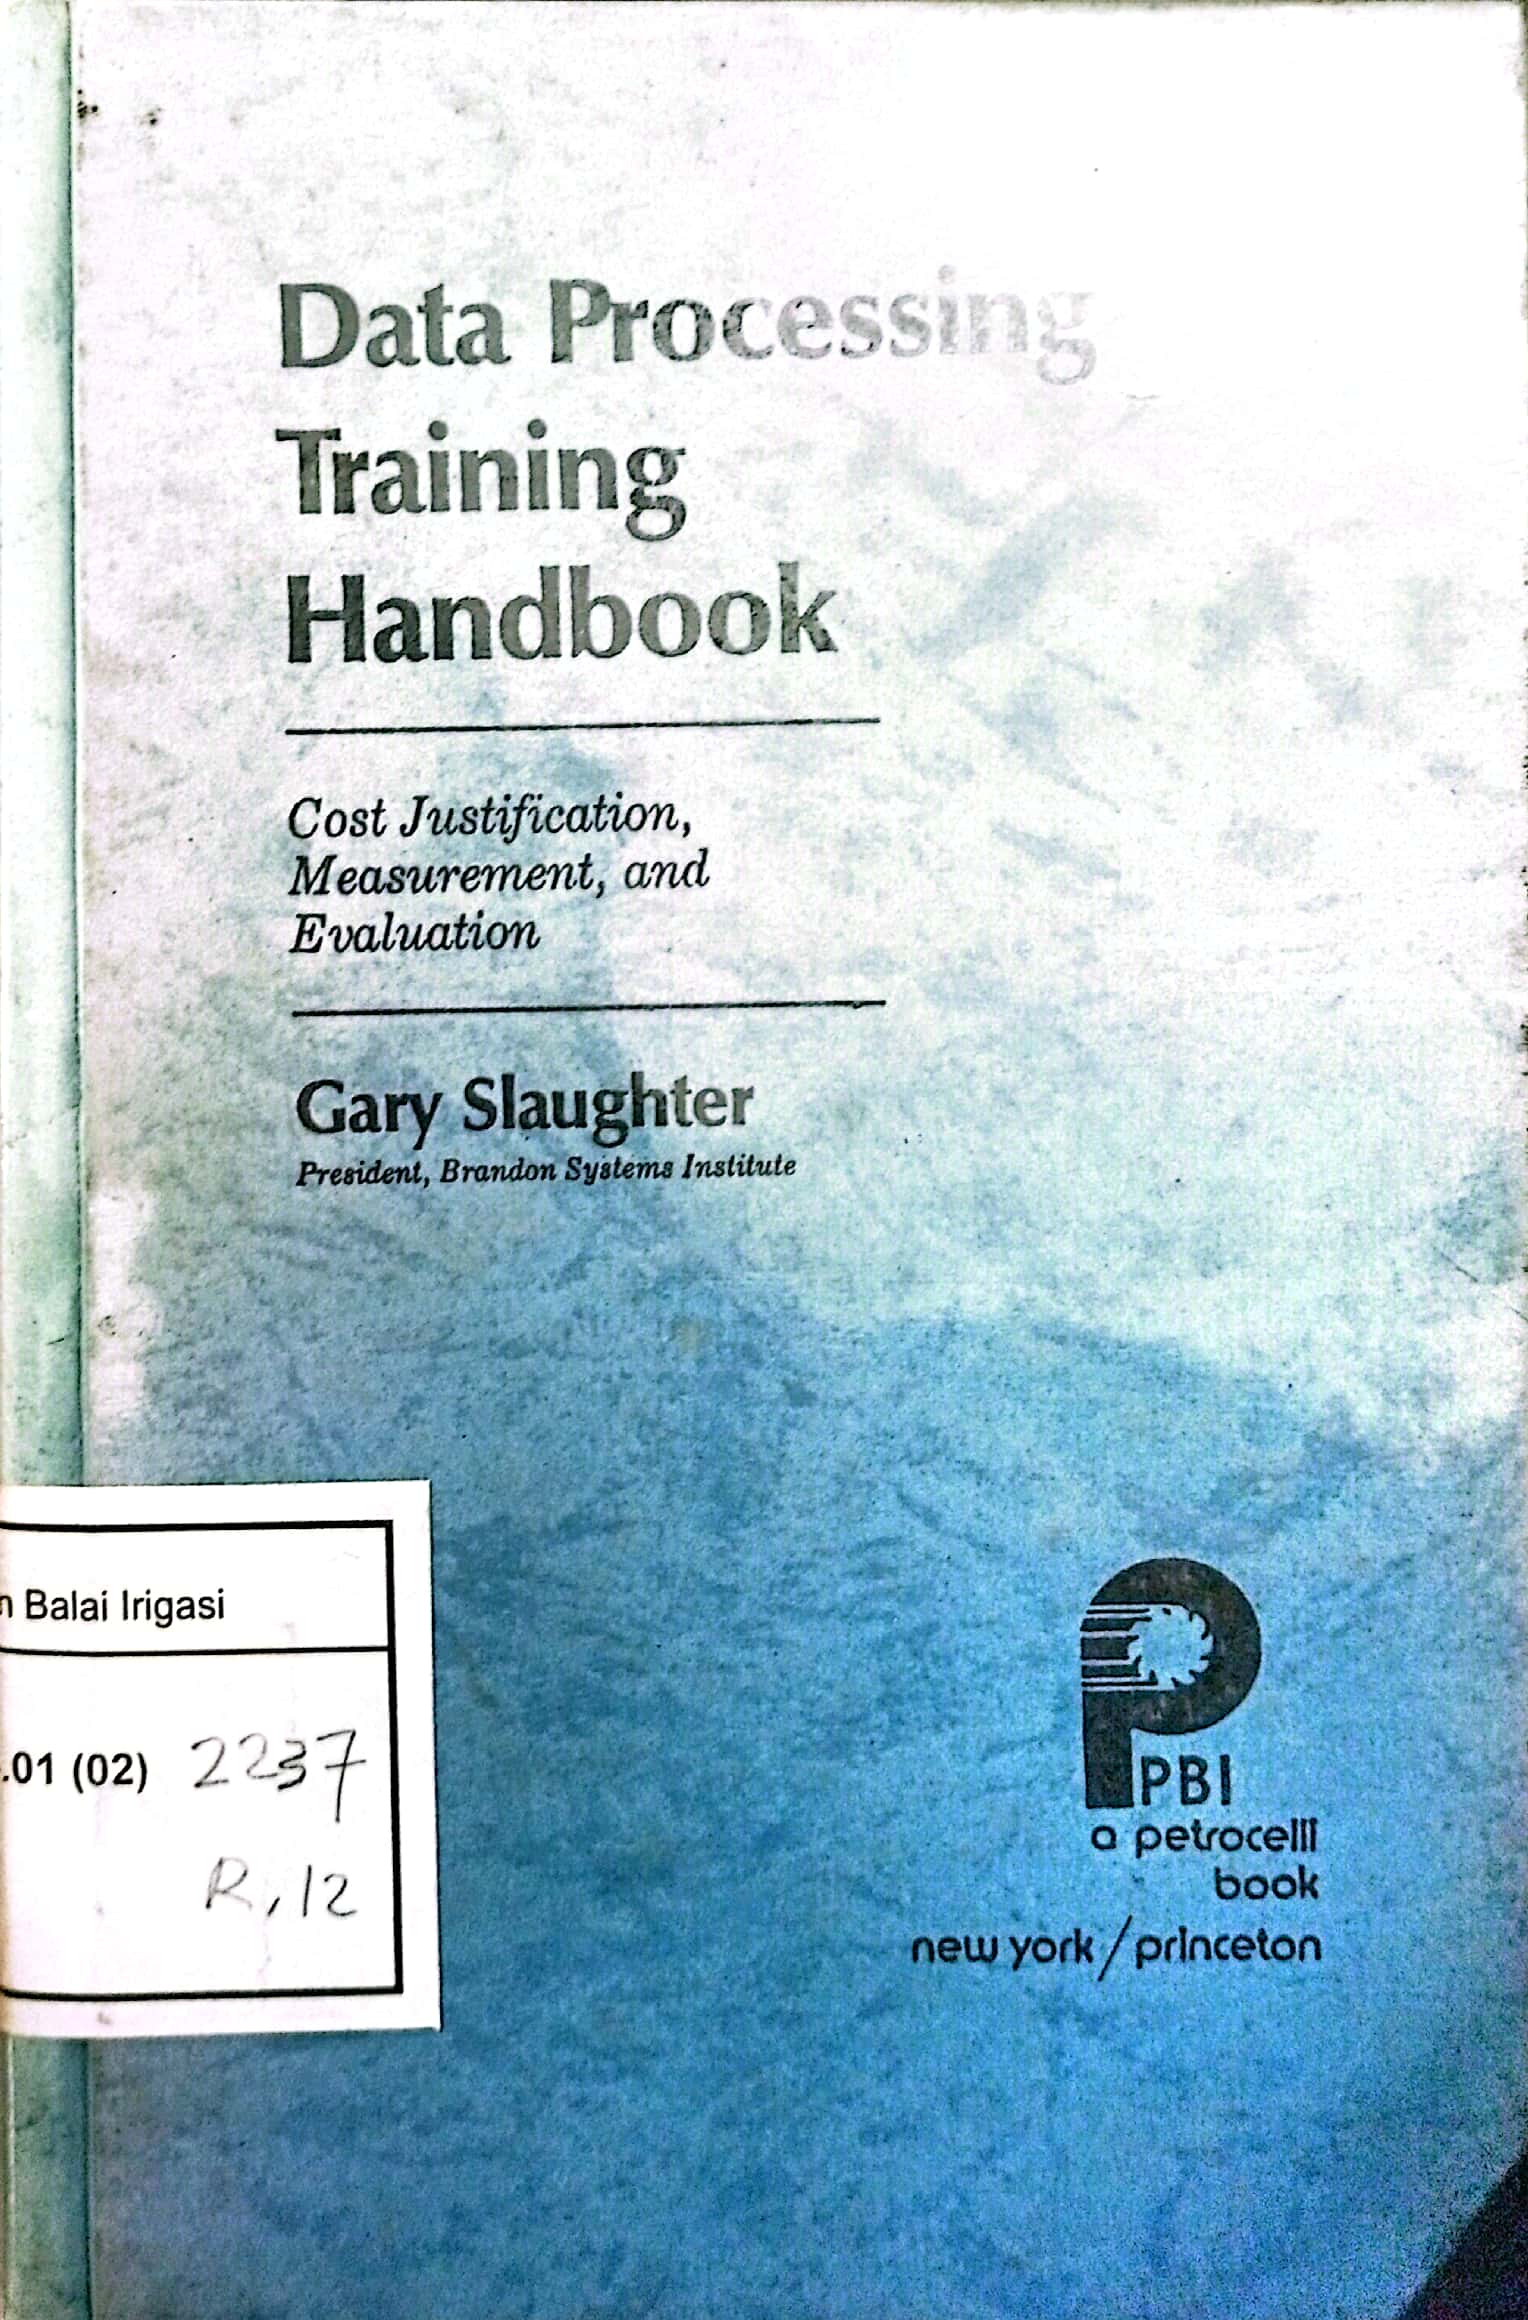 Data Processing Training Handbook